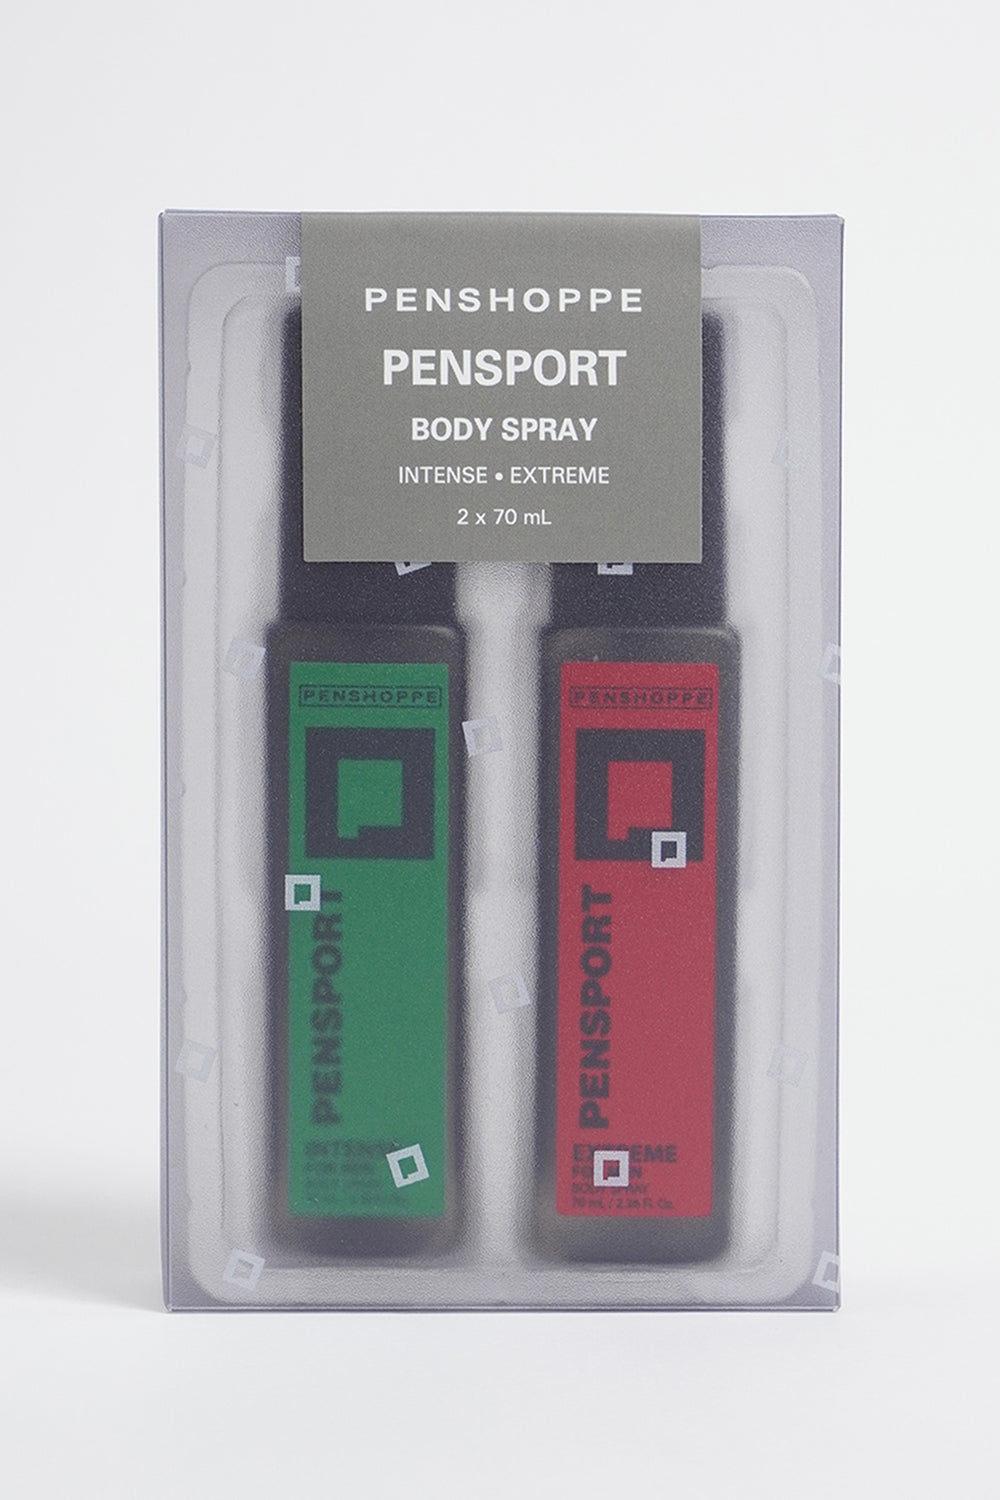 Pensport Intense 70ML and Extreme 70ML Body Spray Gift Set